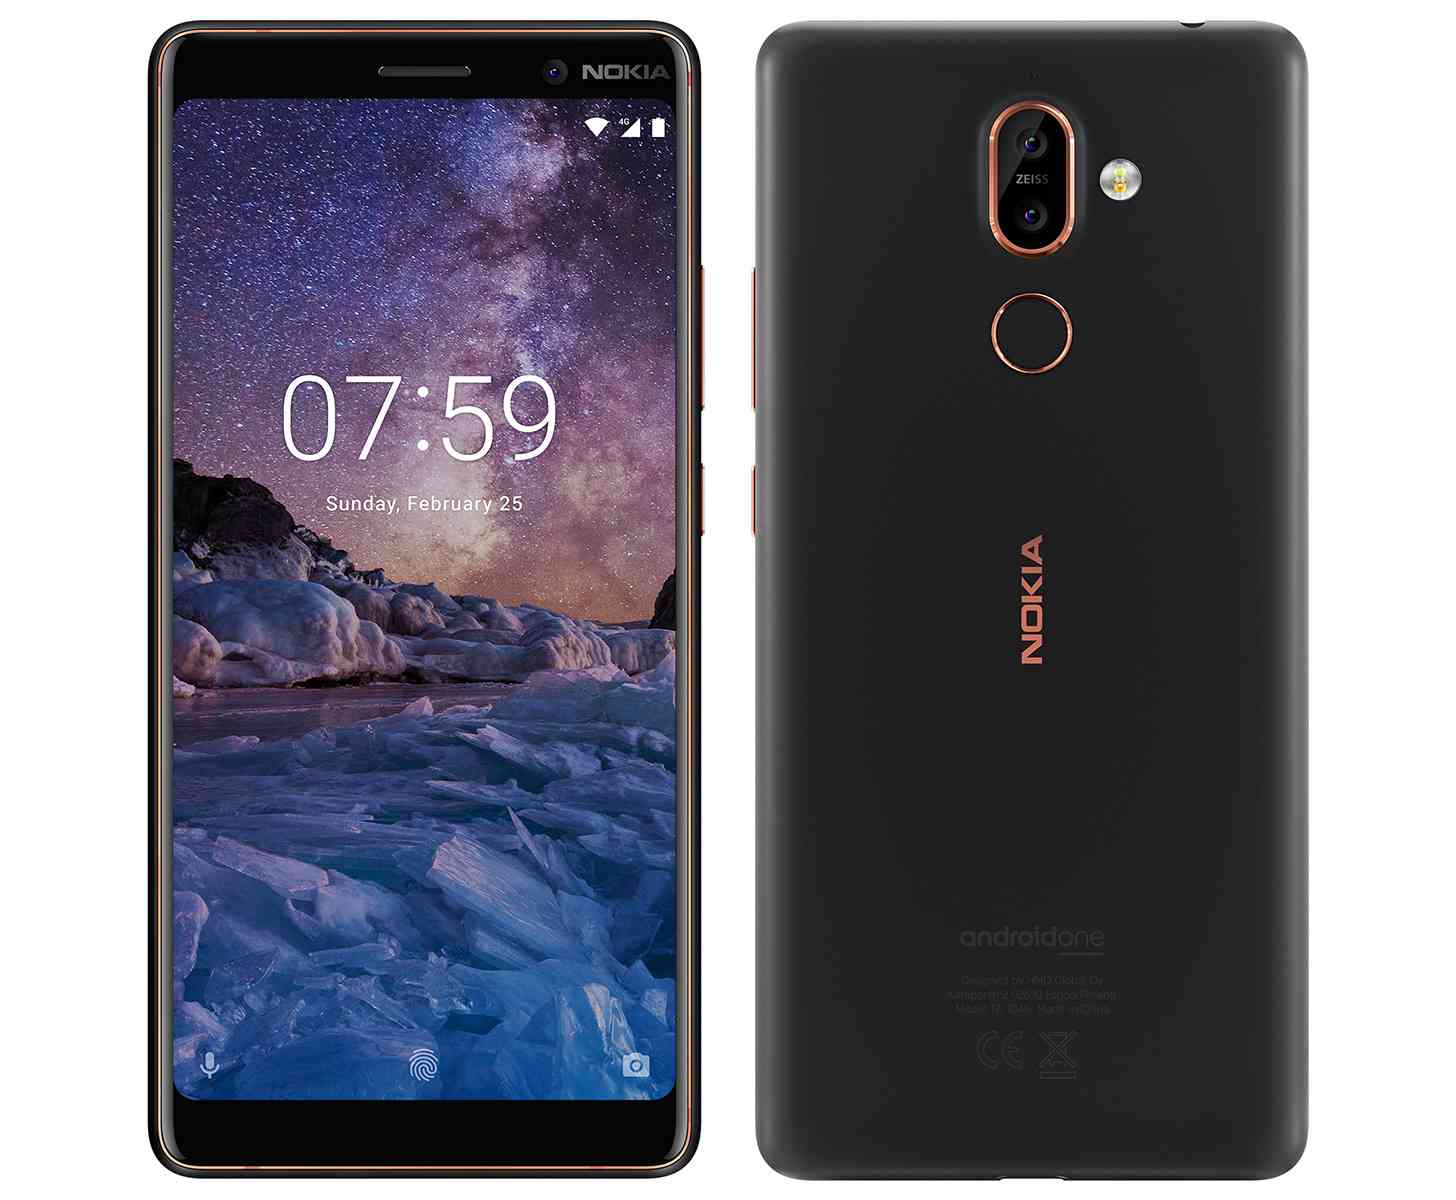 Nokia 7 Plus official images